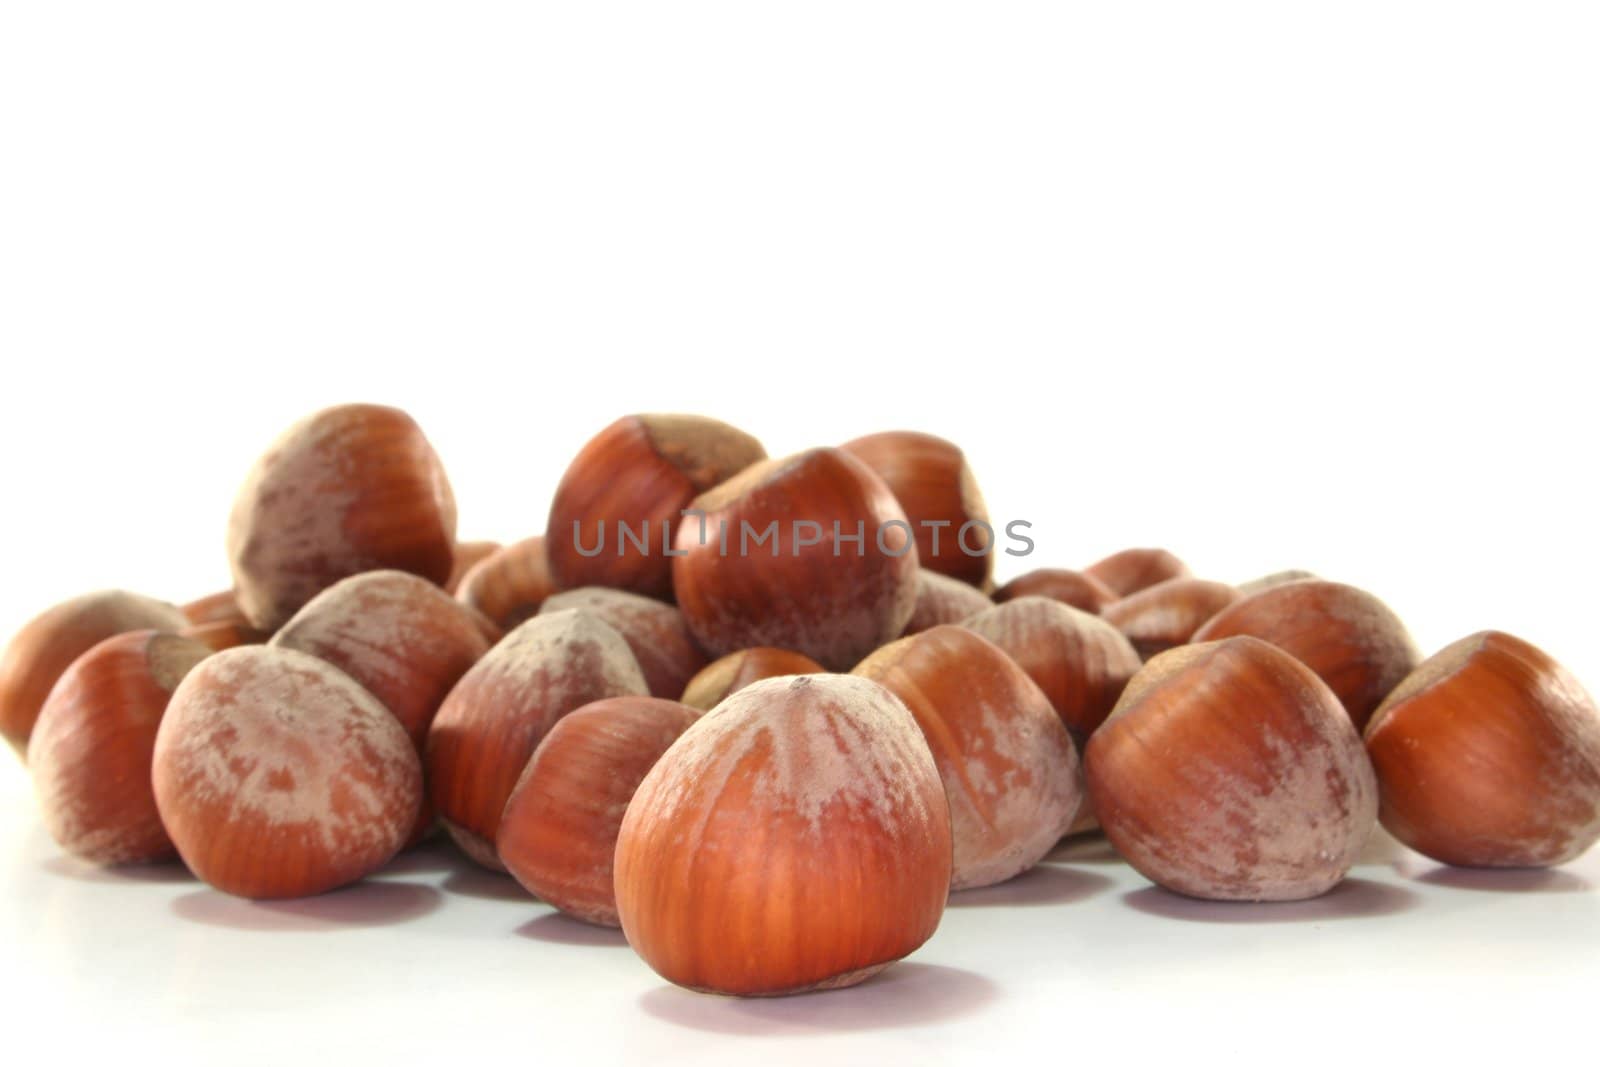 Hazelnuts by discovery